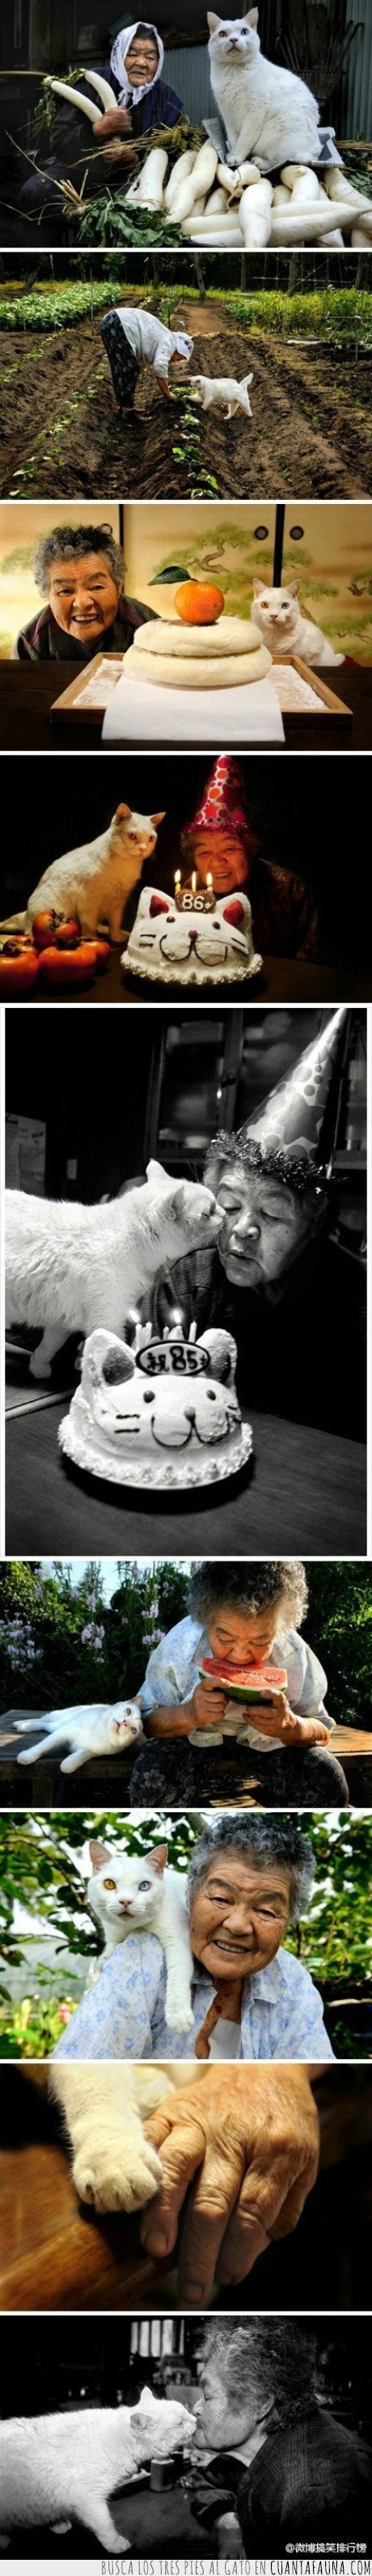 vejez,vida,anciana,gato,Amistad,vieja,abuela,señora,china